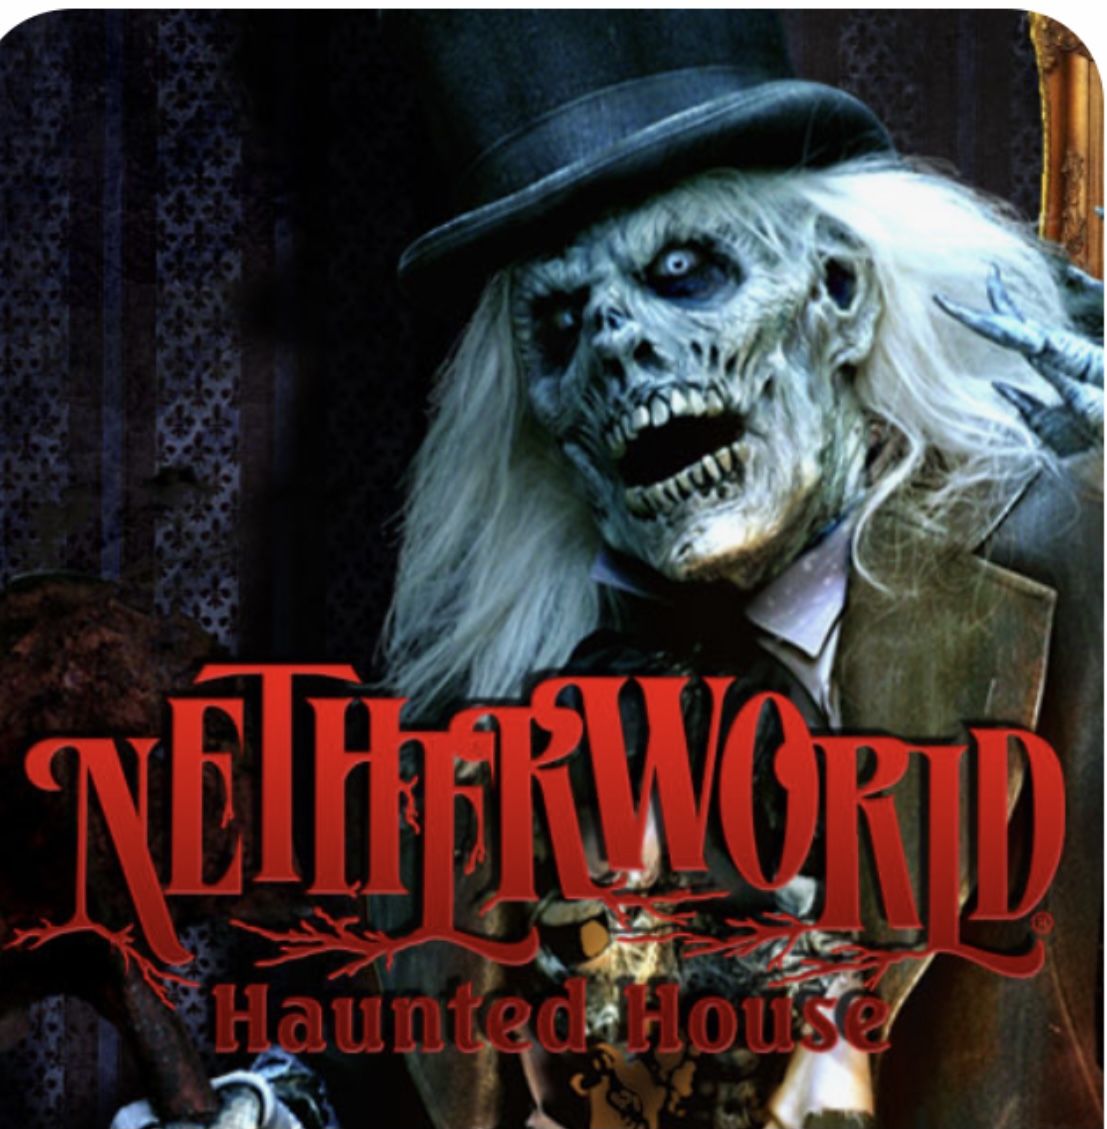 Netherworld Haunted House Tickets 